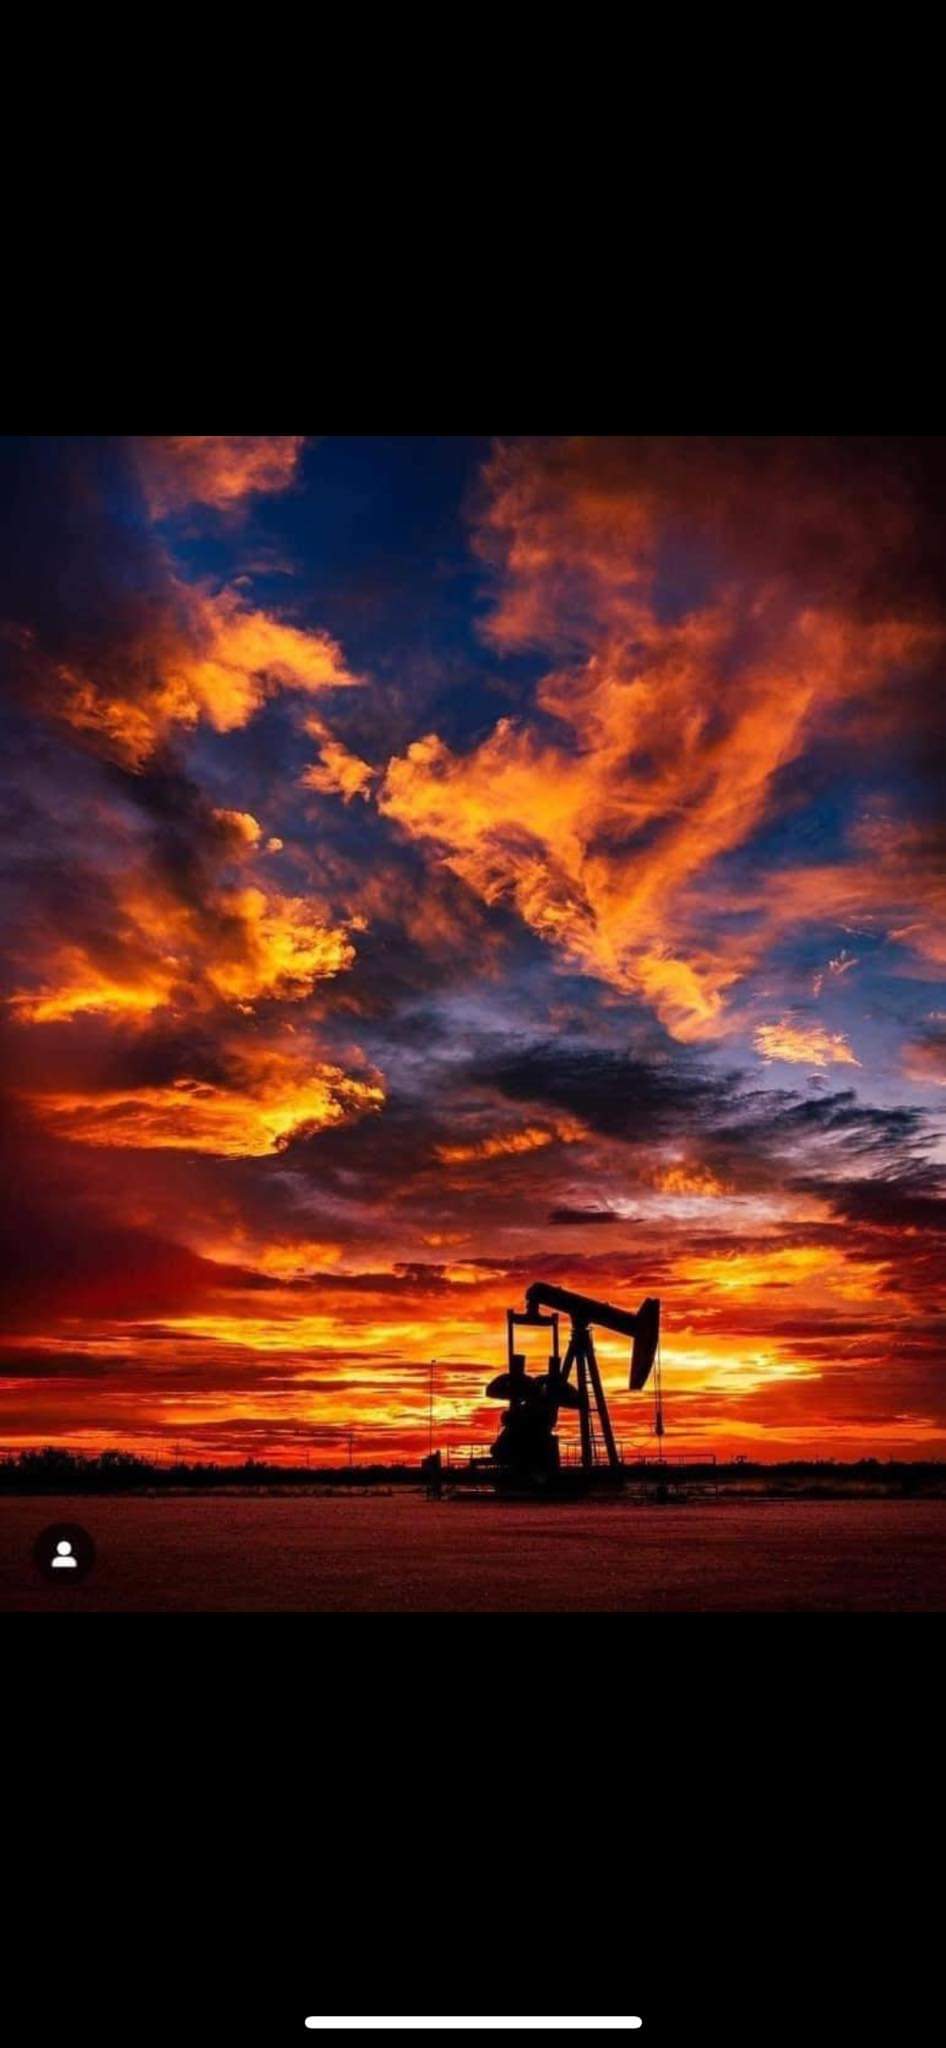 West Texas sunset.jpg